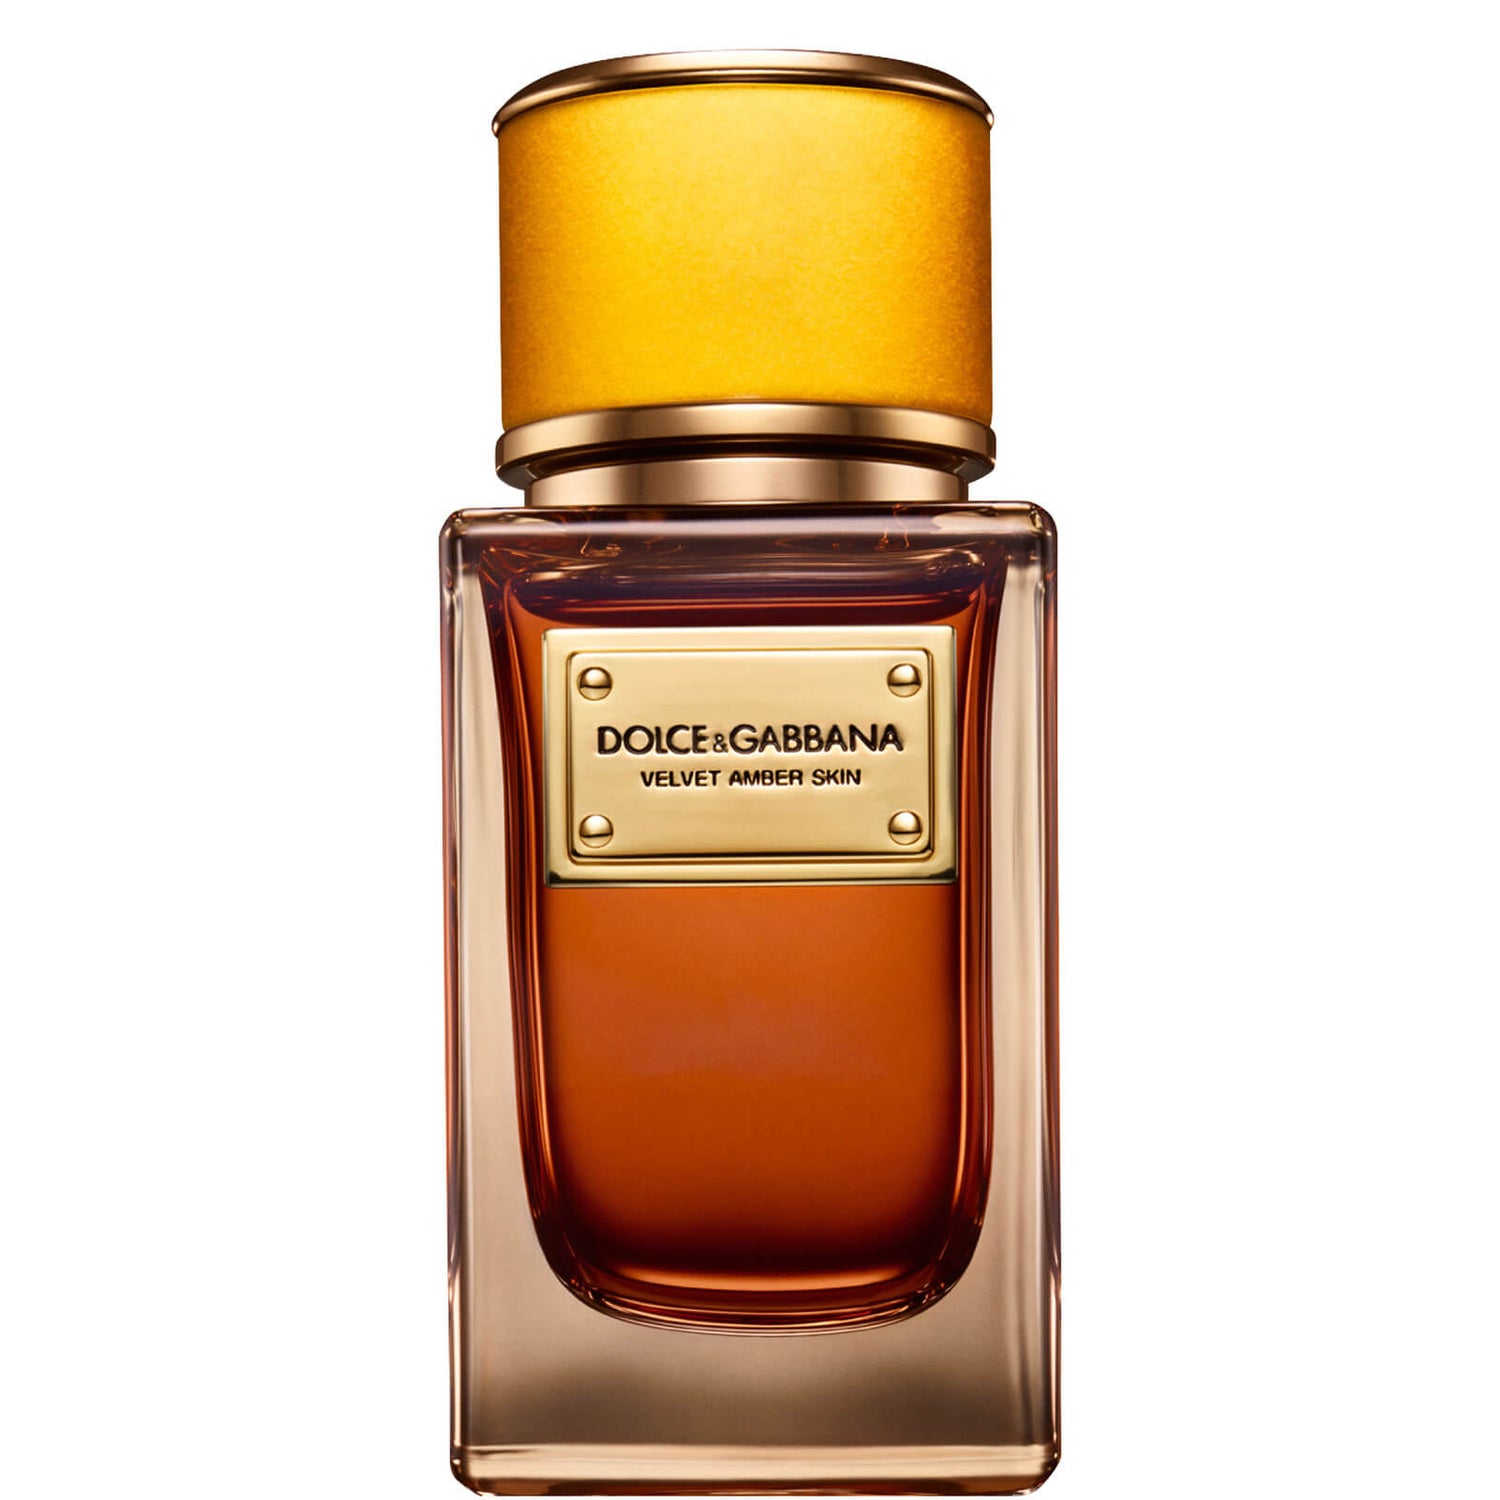 Dolce&Gabbana Velvet Amber Skin Eau de Parfum - 50 ml